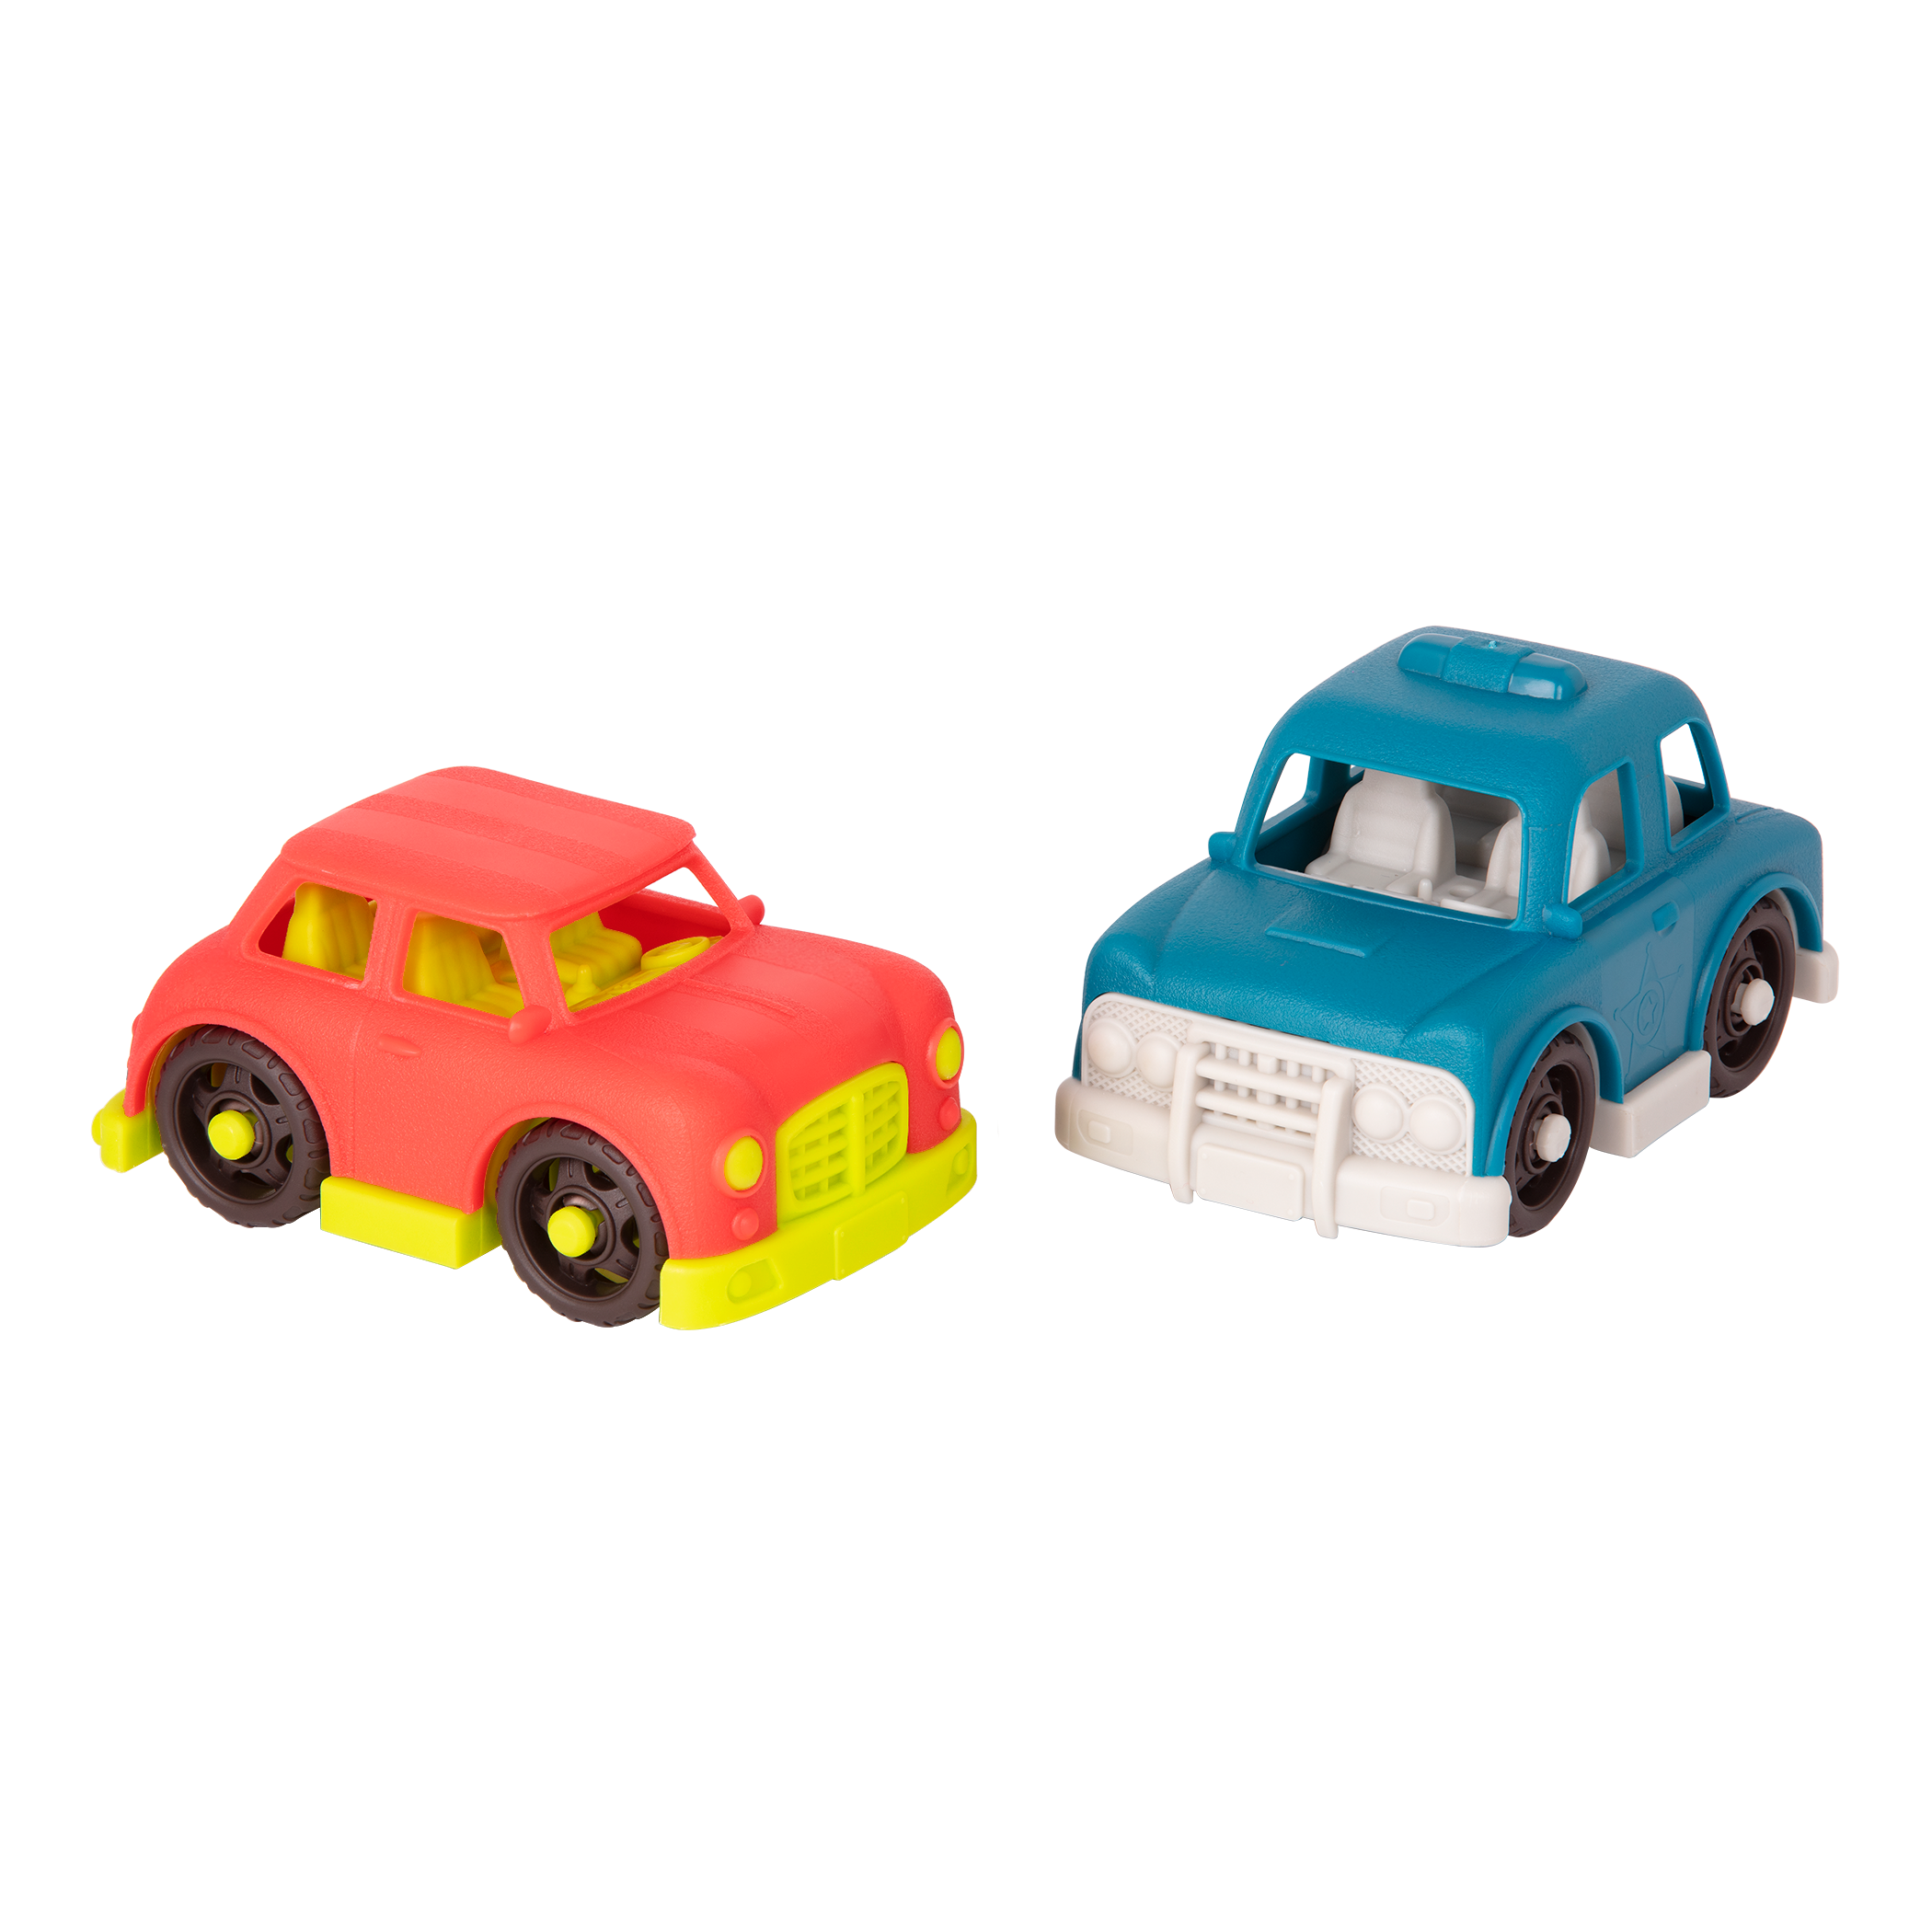 Mini toy cars.